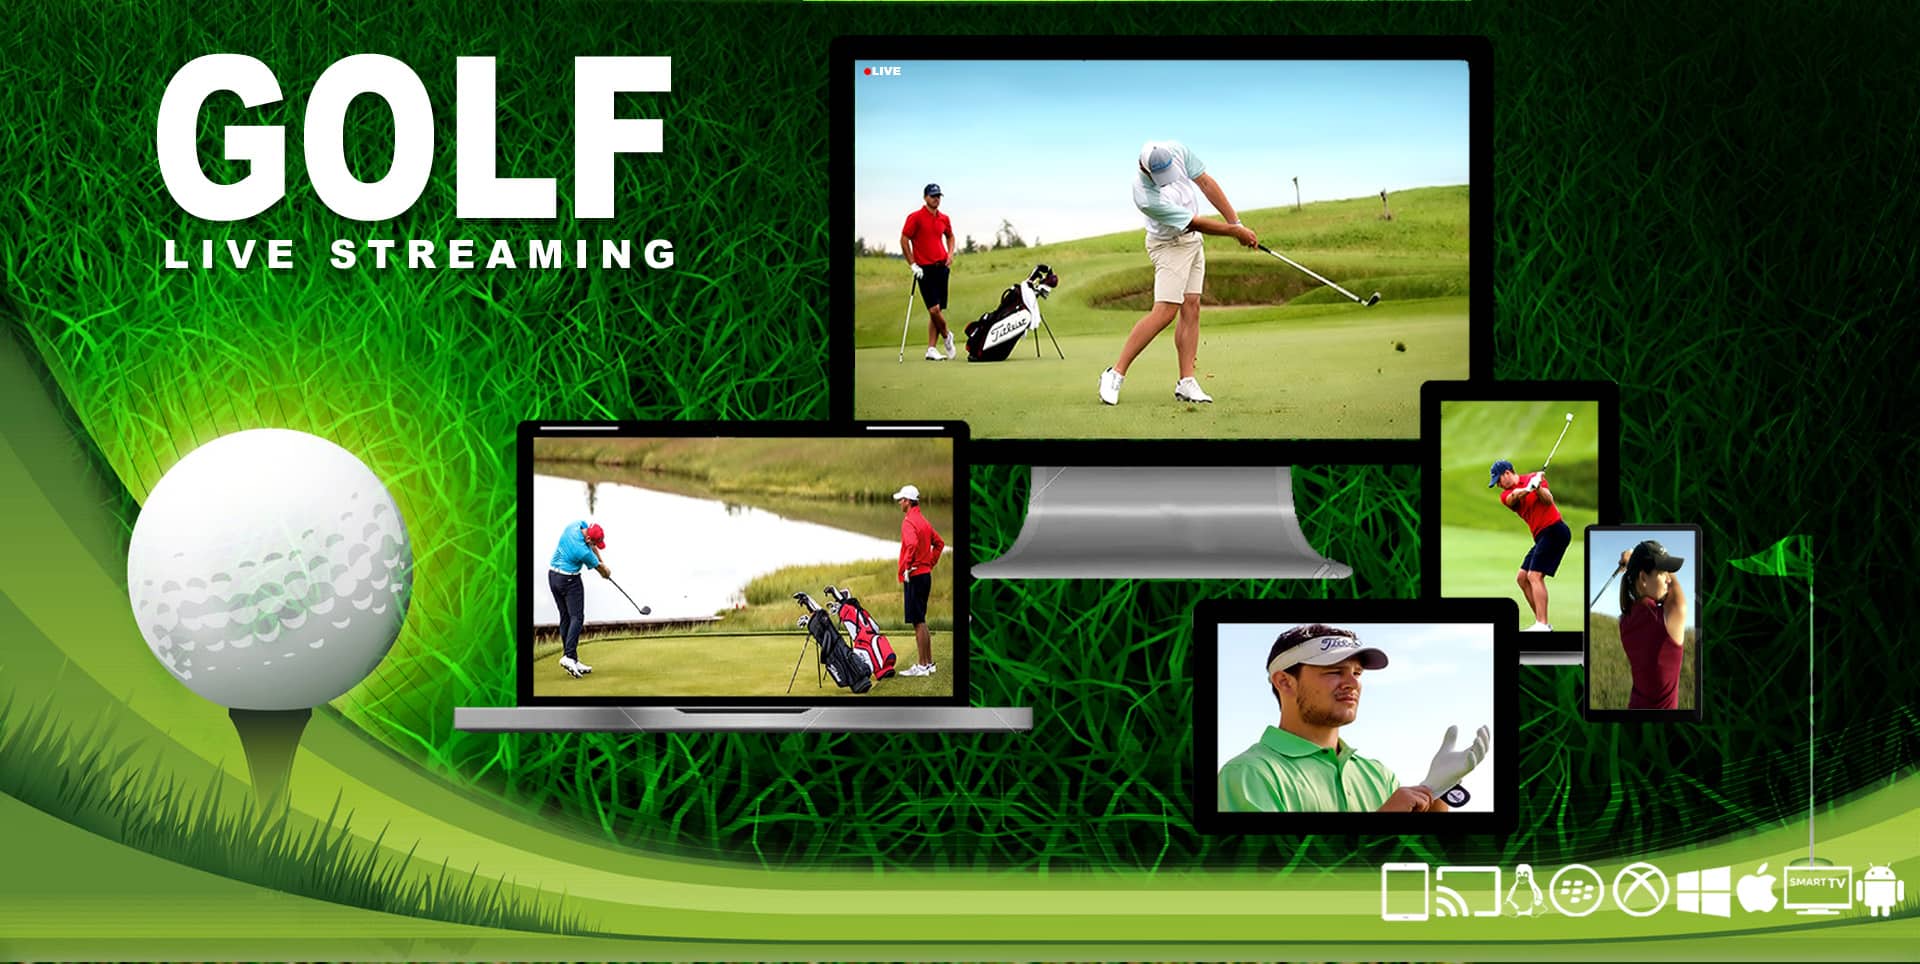 Live Mayakoba Golf Classic, Second Round Online | Mayakoba Golf Classic, Second Round Stream Link 5